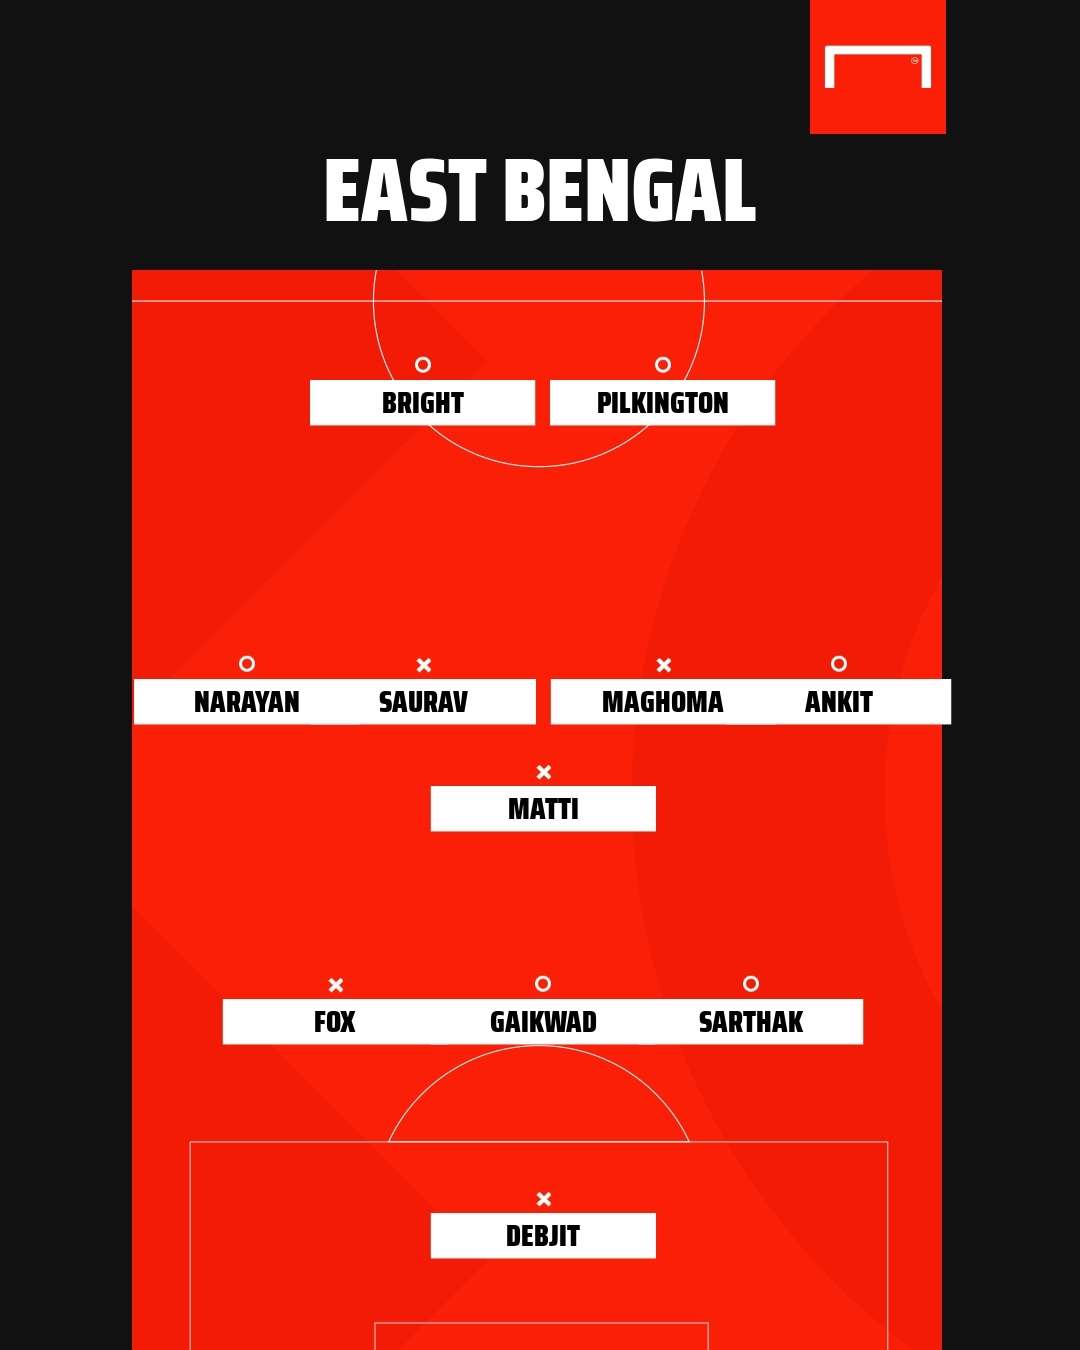 East Bengal possible XI